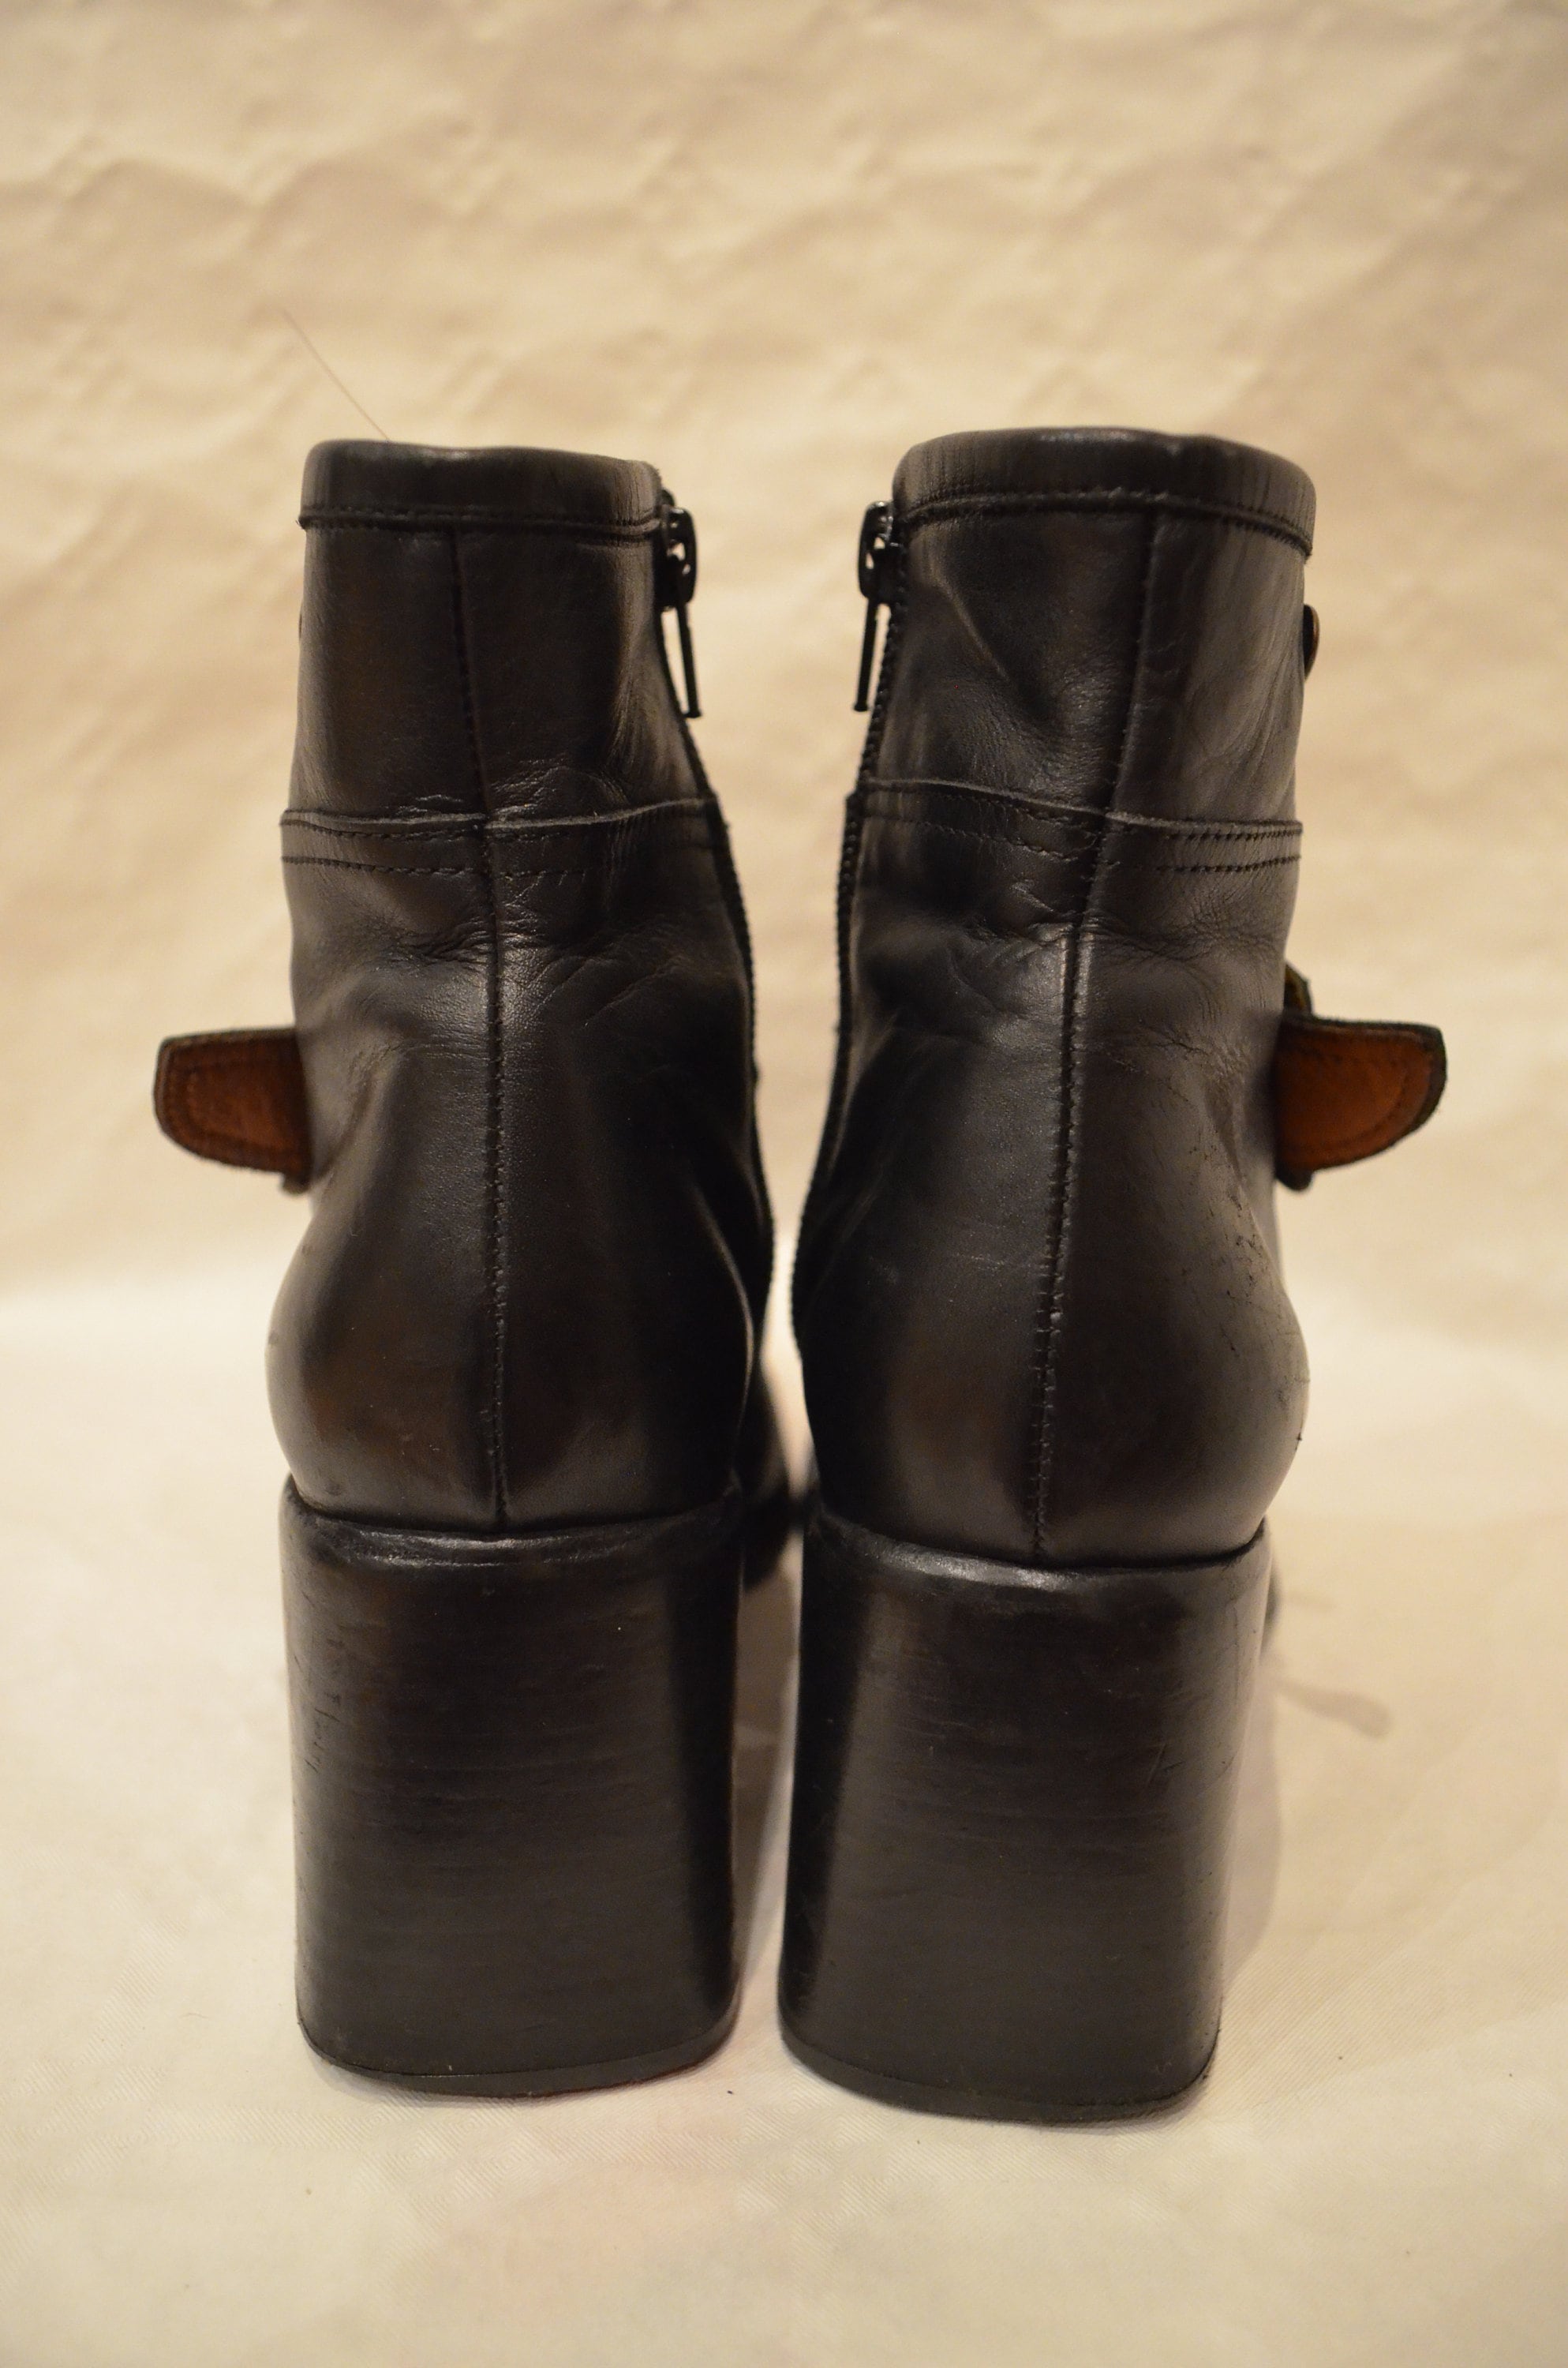 Buffalo Ankle Boots 90 Er Originals Half-High Heel Plateau | Etsy